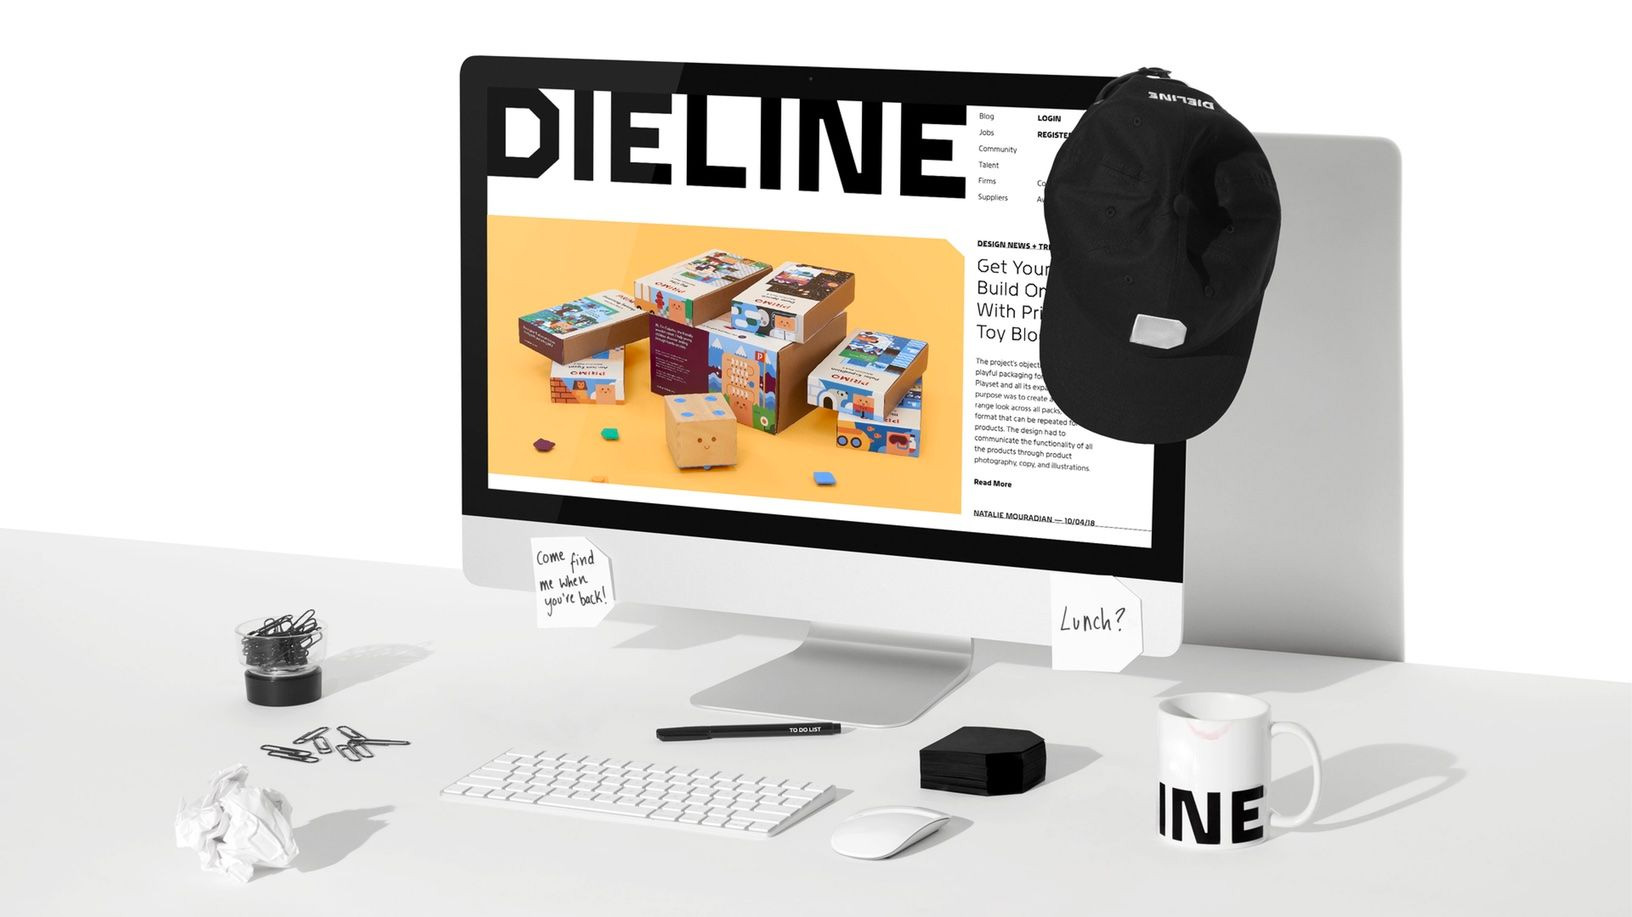 разработка сайта, Дизайн упаковки, Айдентика, Jones Knowles Ritchie, Dieline